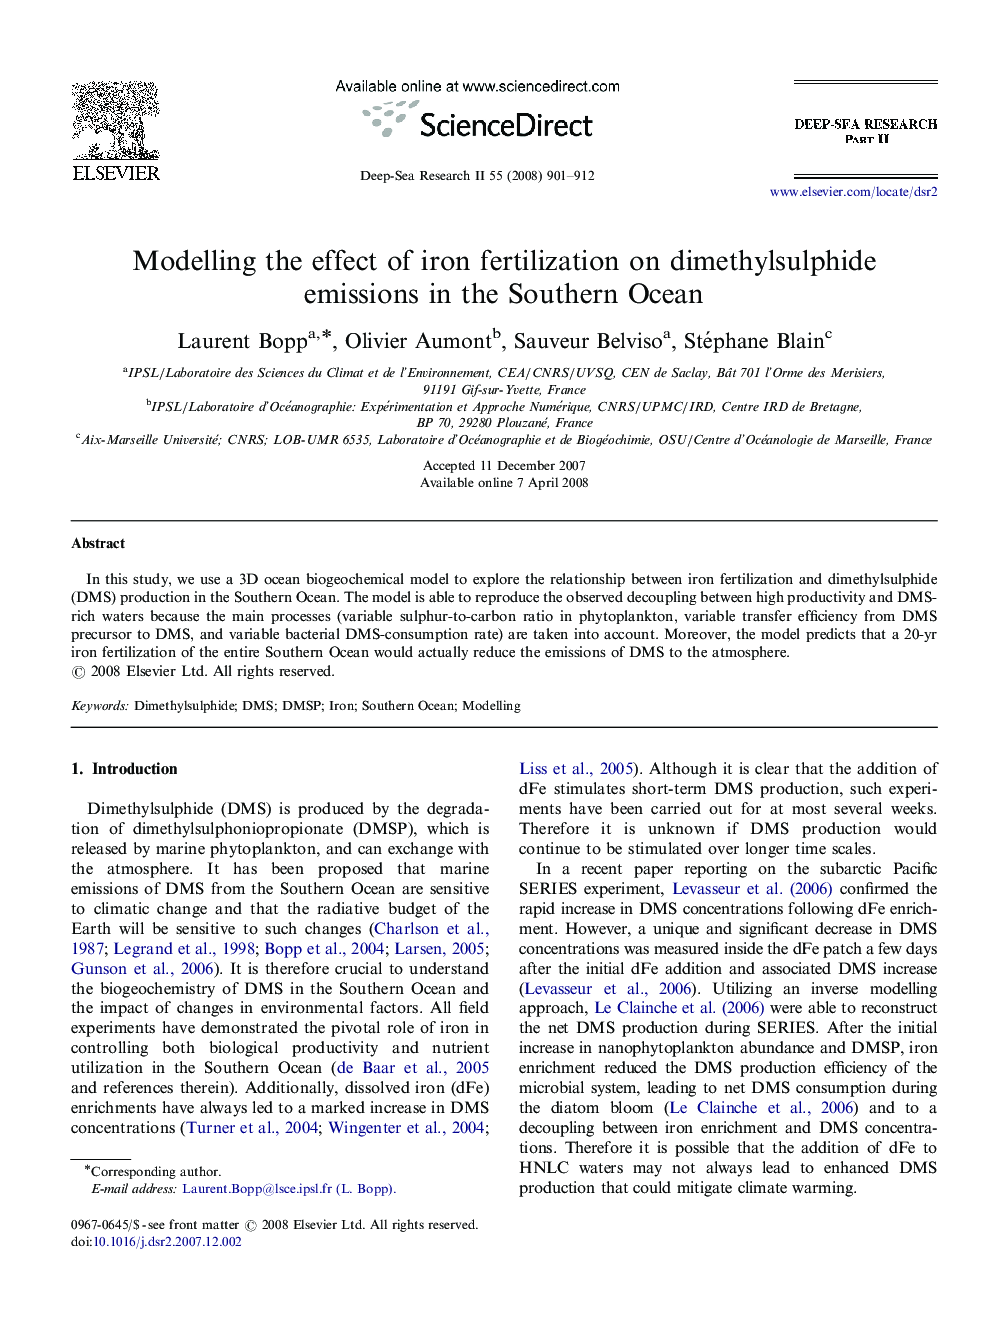 Modelling the effect of iron fertilization on dimethylsulphide emissions in the Southern Ocean